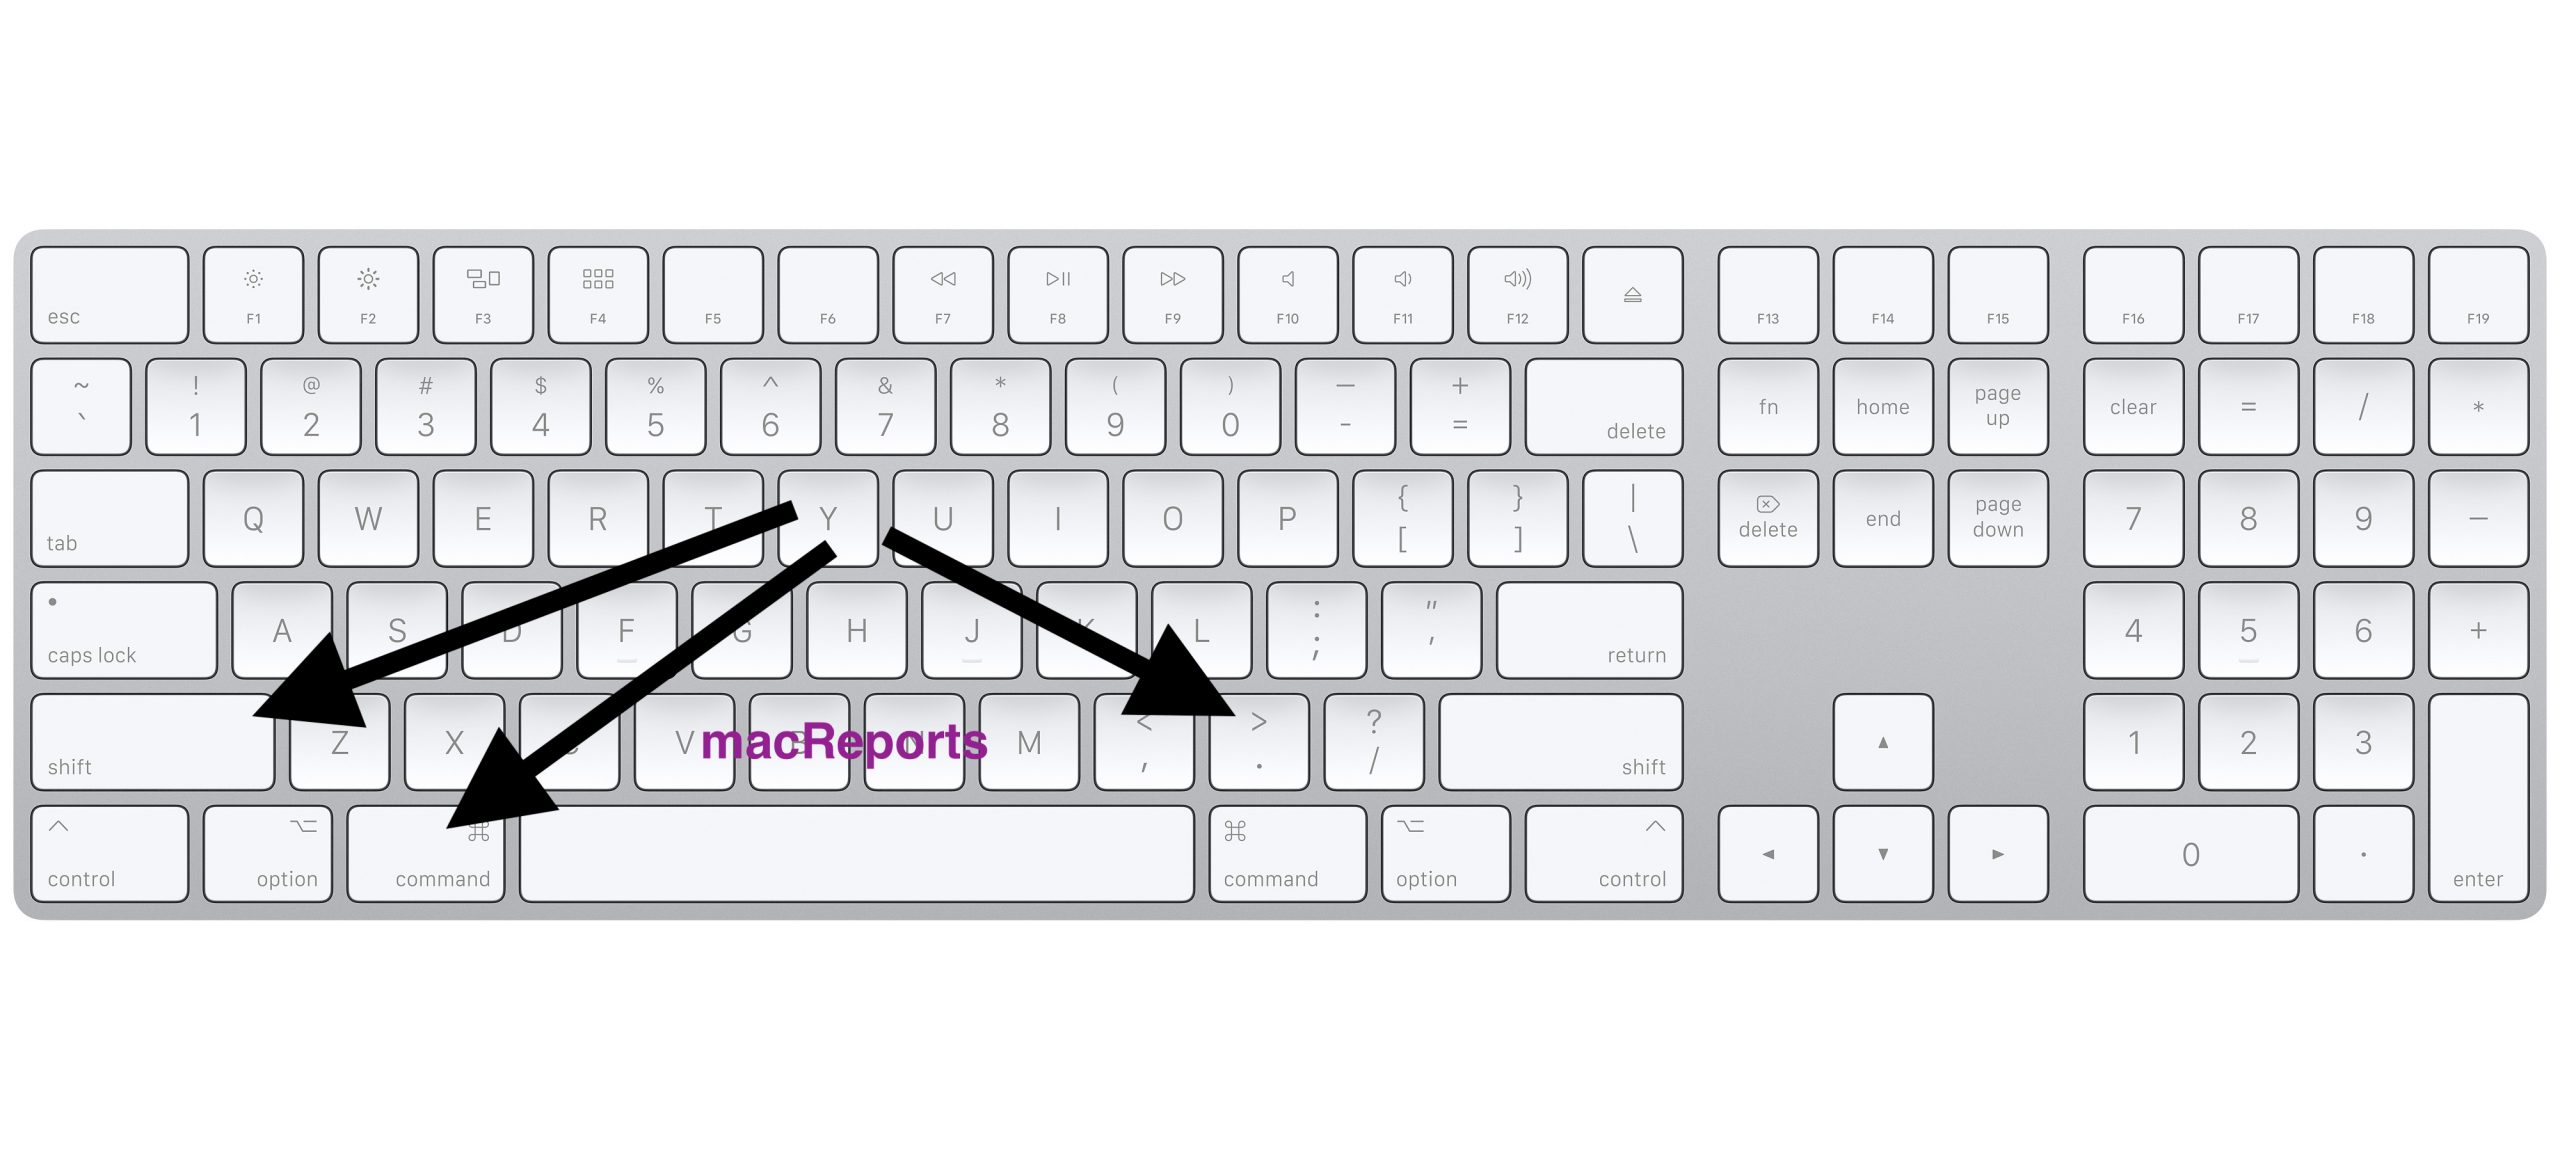 Command на клавиатуре. Клавиша Command на Mac. Раскладка клавиатуры Мак на виндовс. Shift + option _cmd+r на клавиатуре. Кнопка option на макбук.